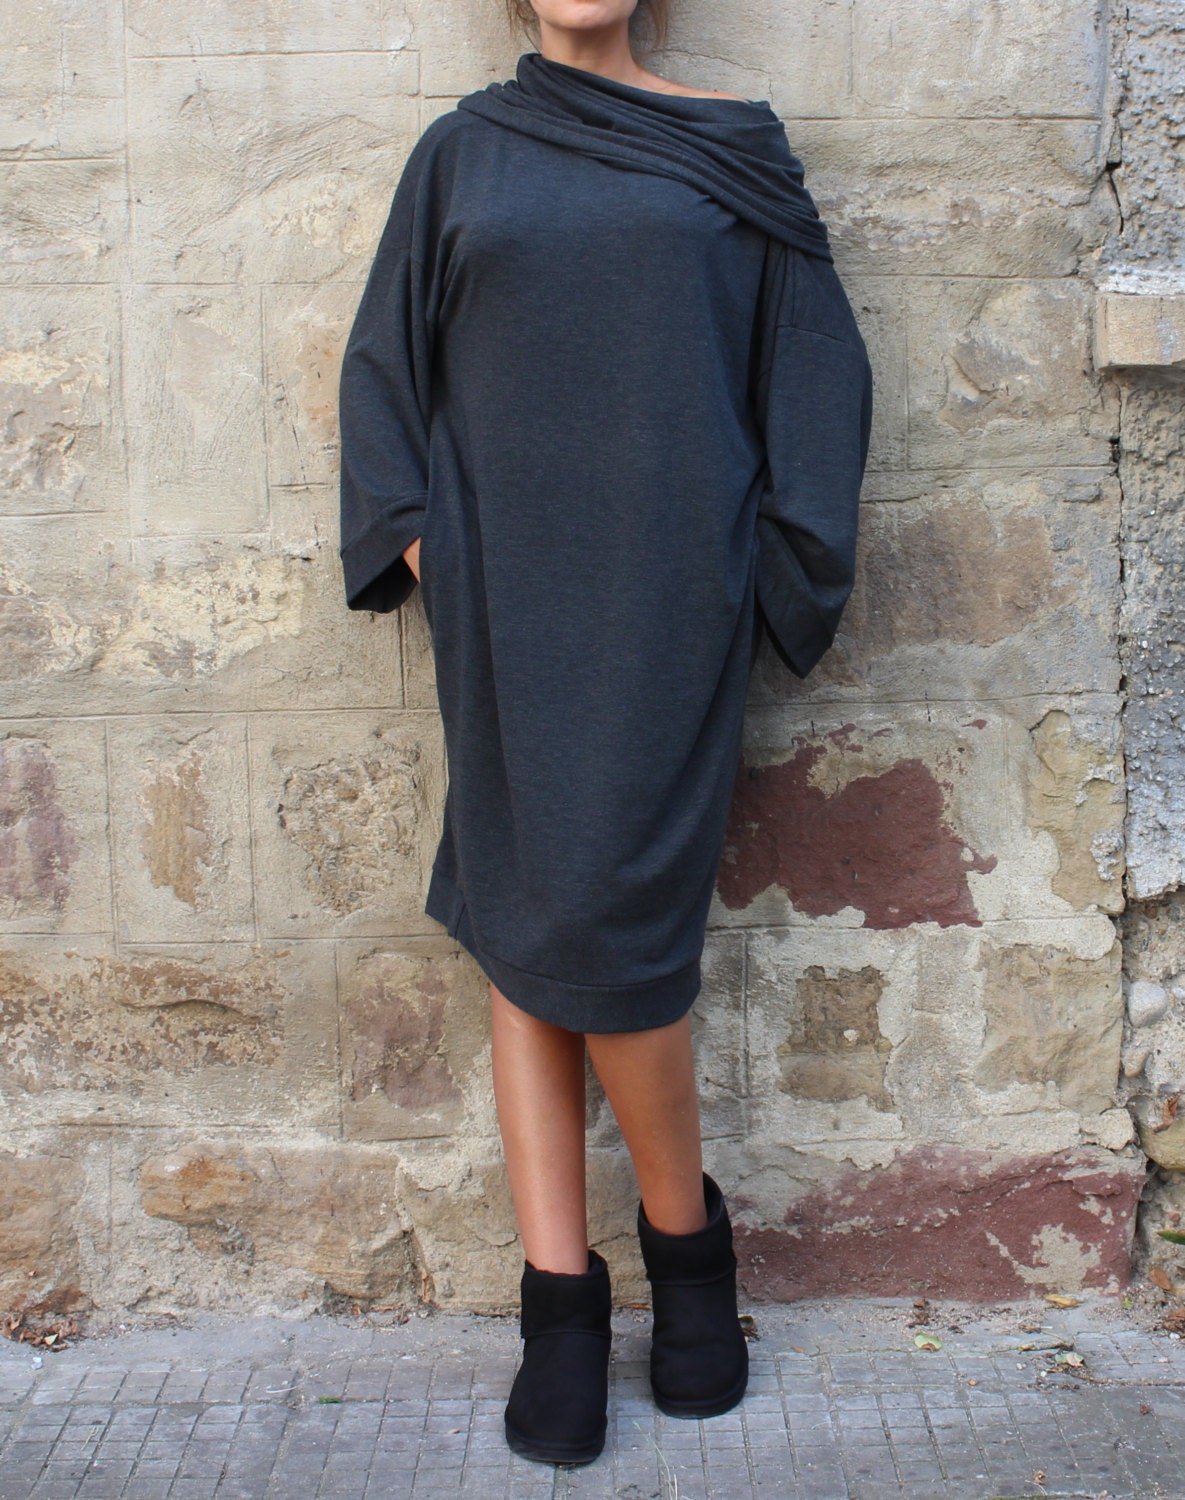 Black Winter Dress, Knit Loose Warm Sweater Midi Plus Size Clothing, Off Shoulder Avant Garde Clothing